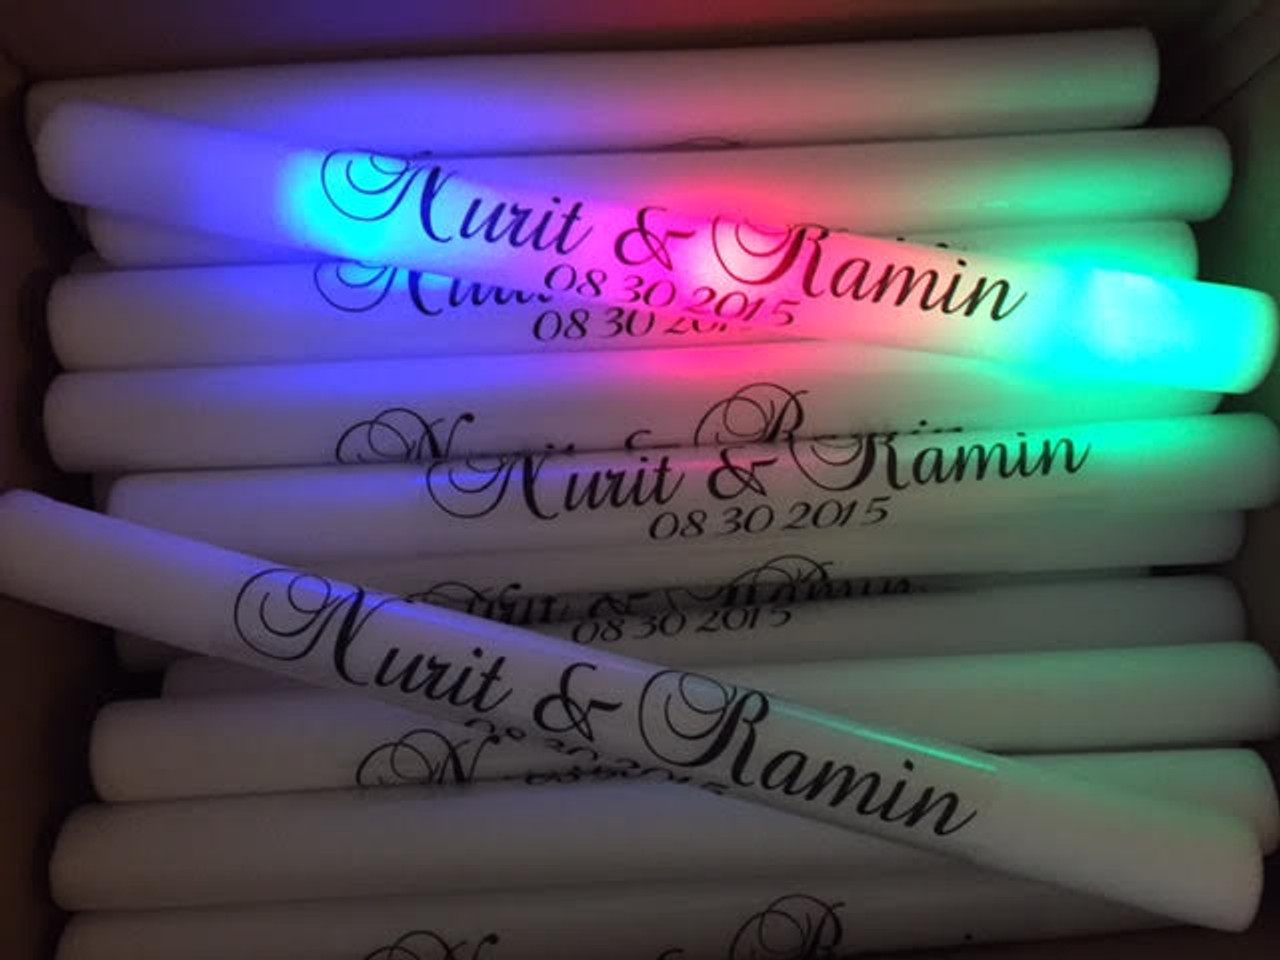 25 Personalized LED Foam Sticks Light-Up Customized Batons DJ Custom Glow Wands 